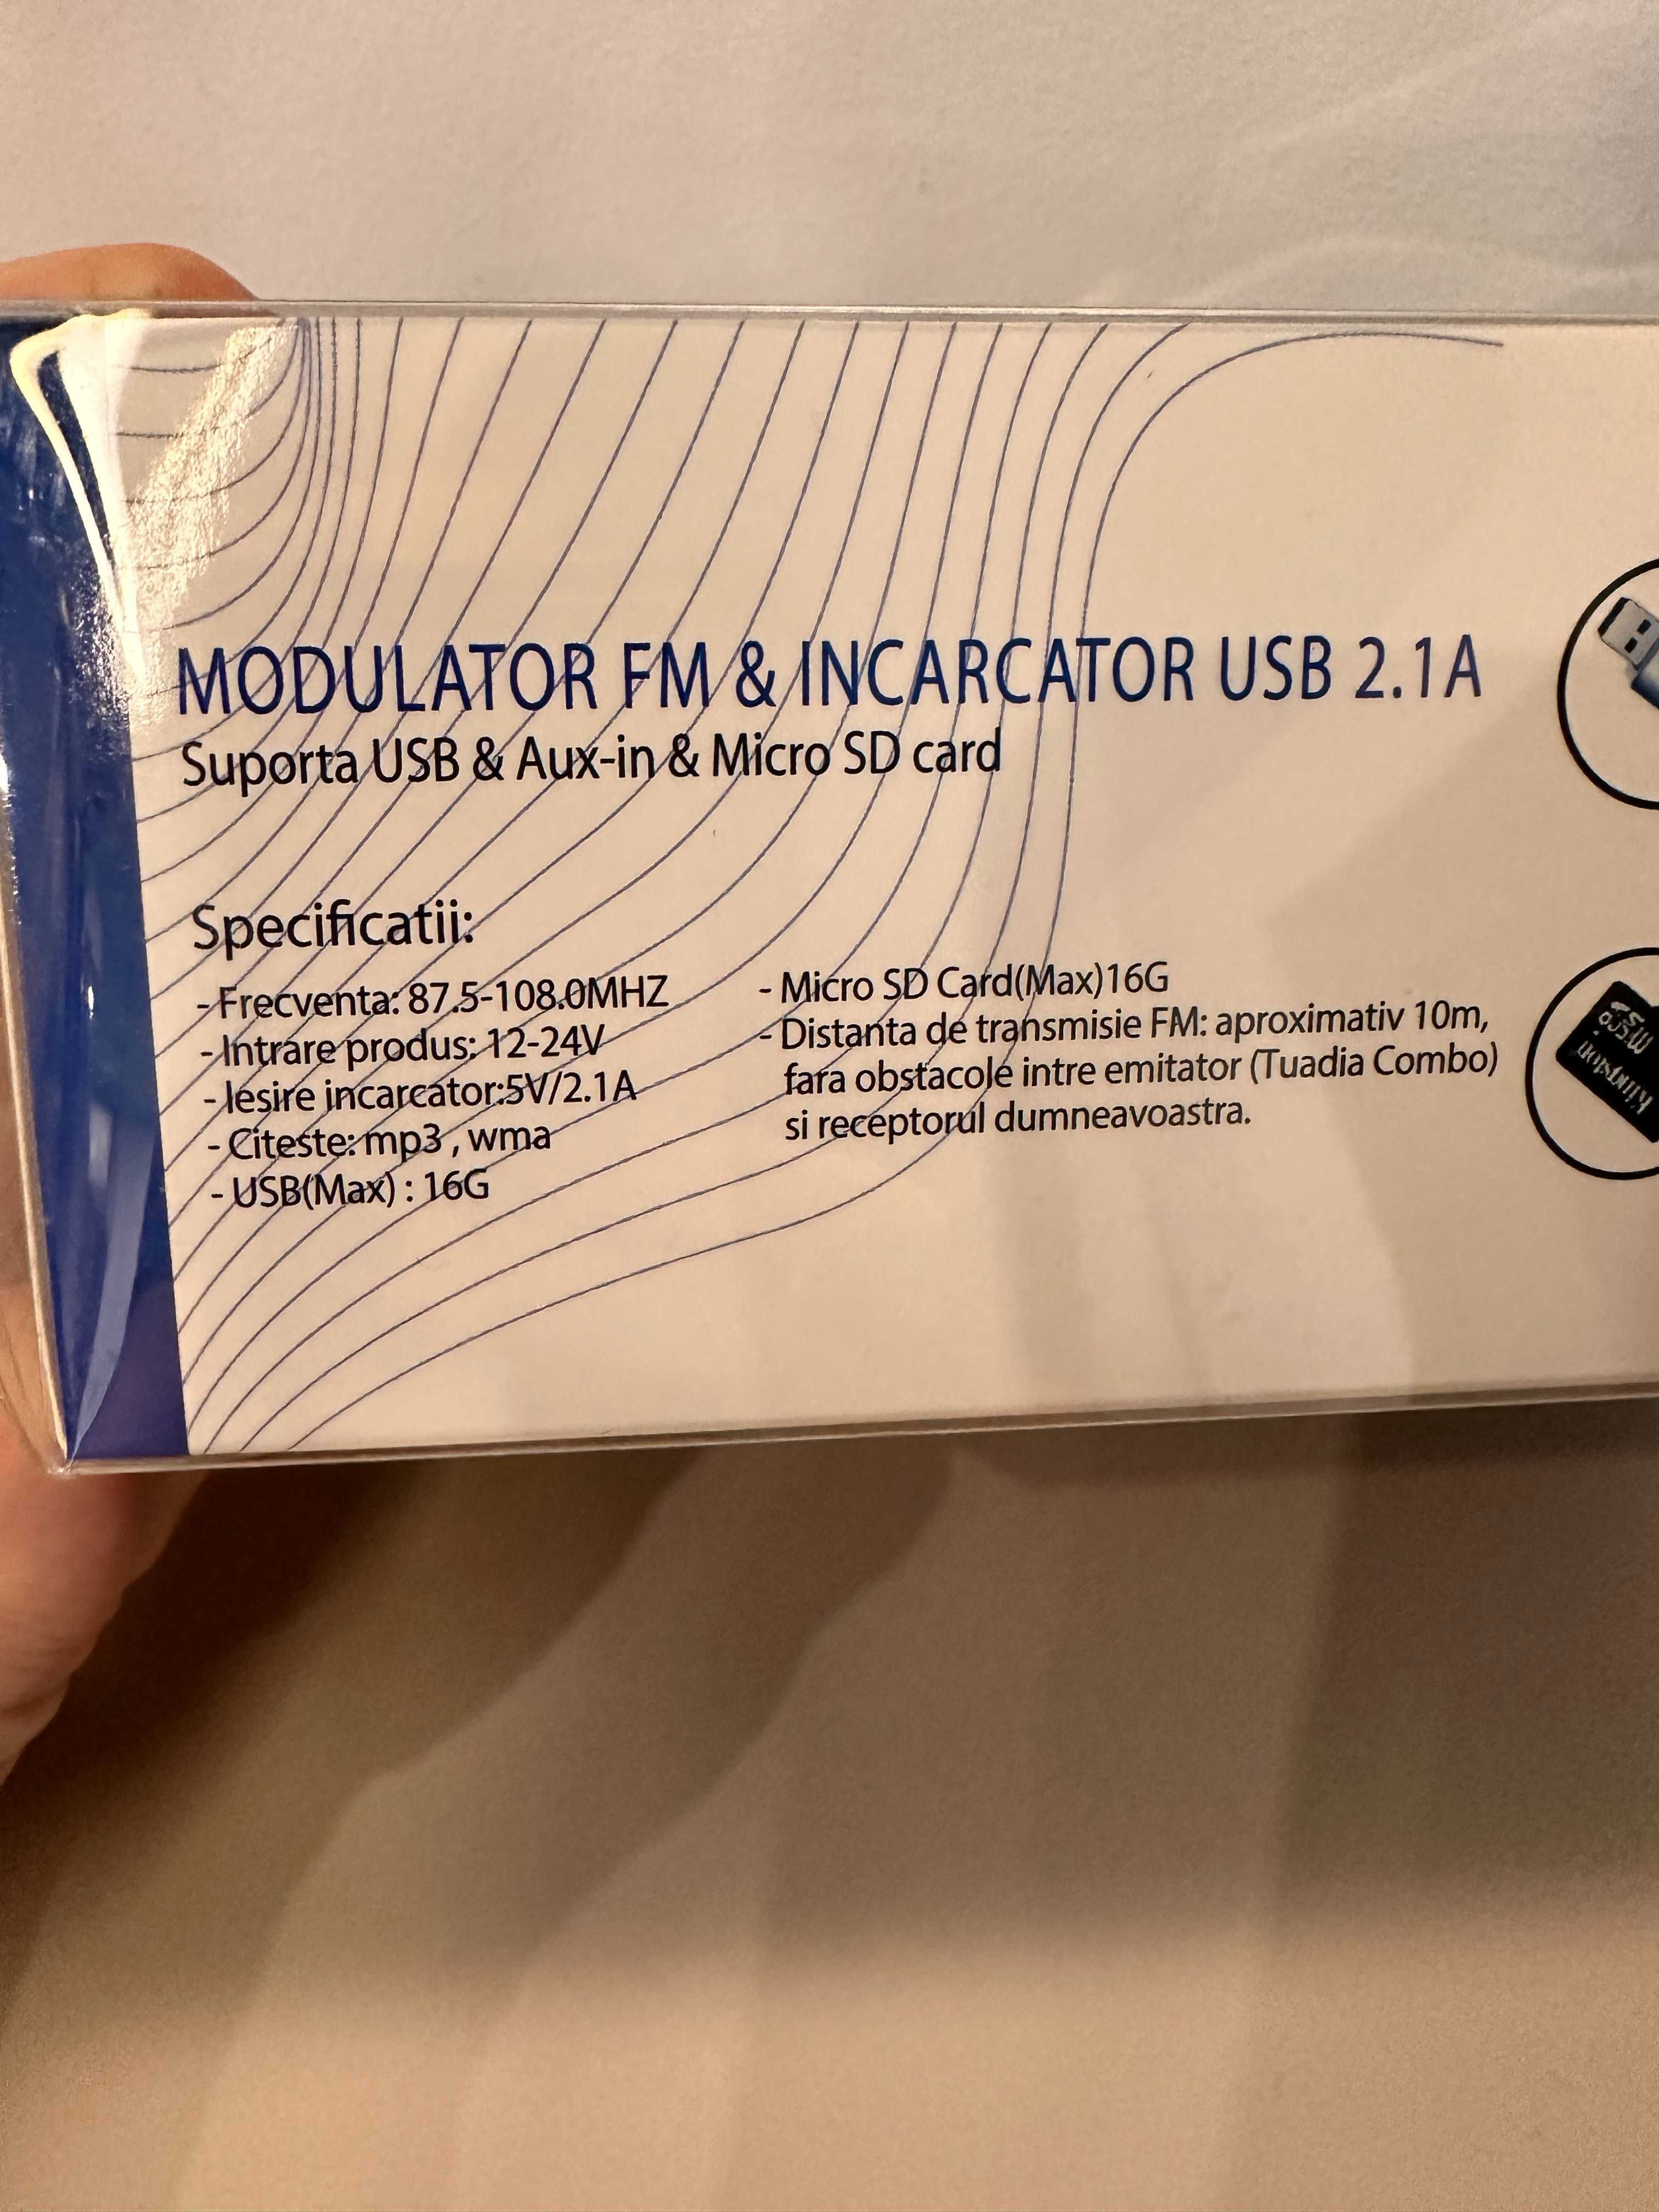 Modulator FM & incarcator USB 2.1A & Aux-in & Micro SD card